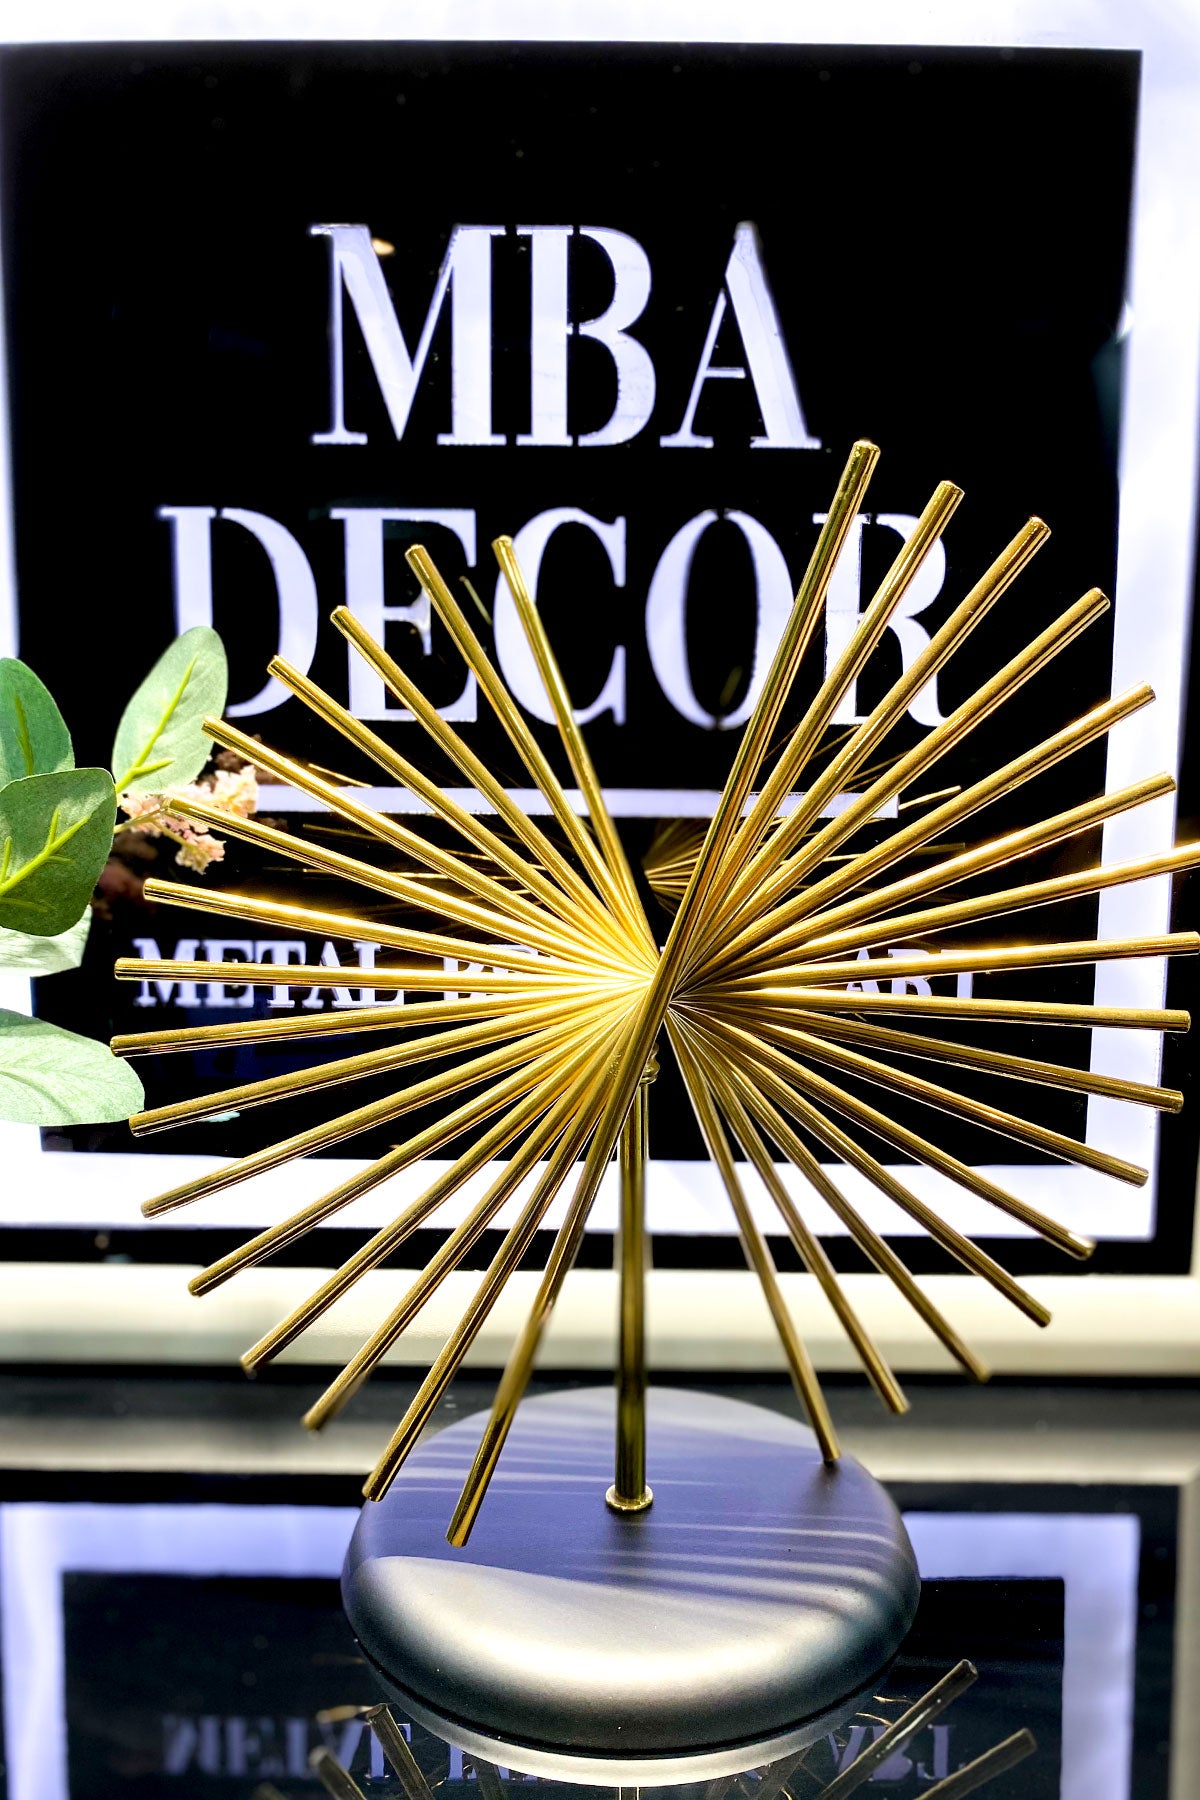 Tekli Gold Dekoratif Obje Yılbaşı Dekorasyon Ofis Konsol Zigon Sehpa Üstü Paslanmaz Metal Palmiye